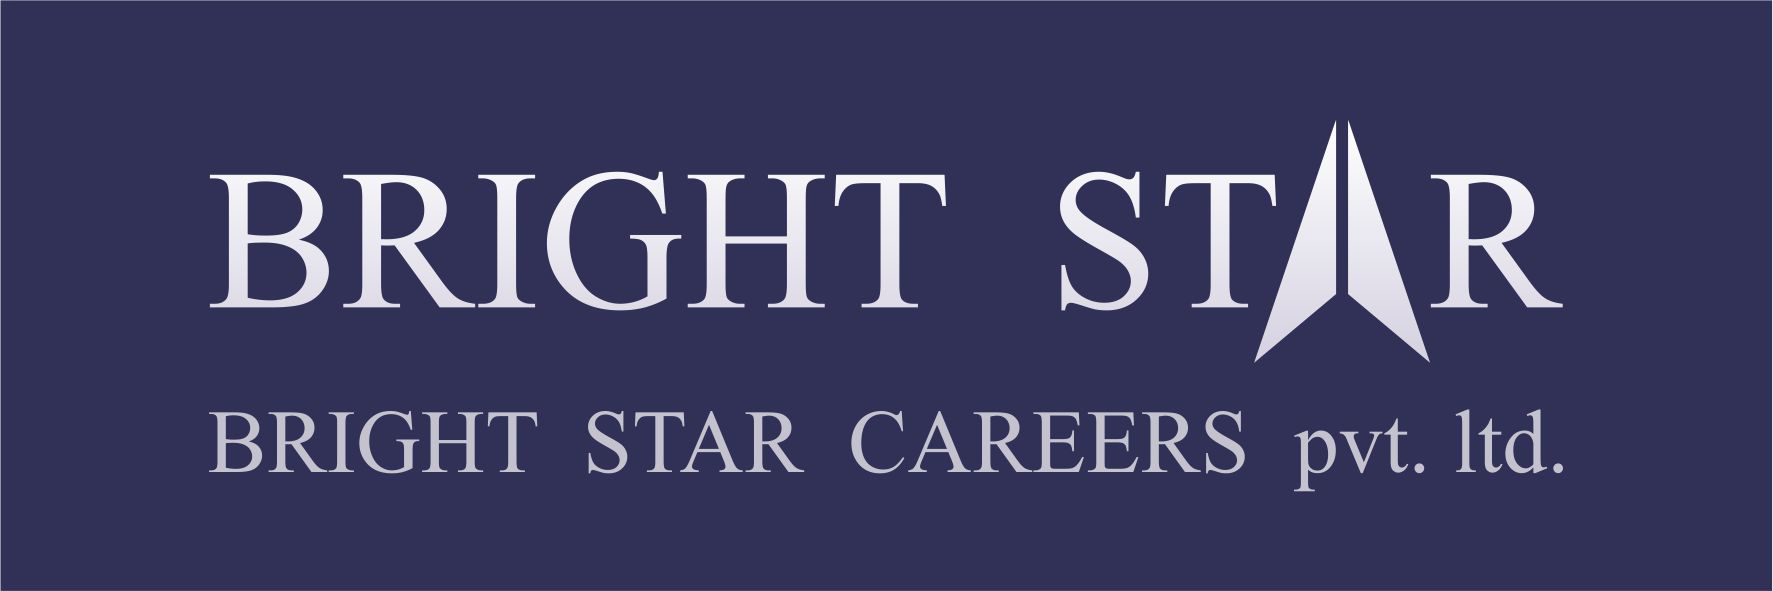 Bright Star Careers